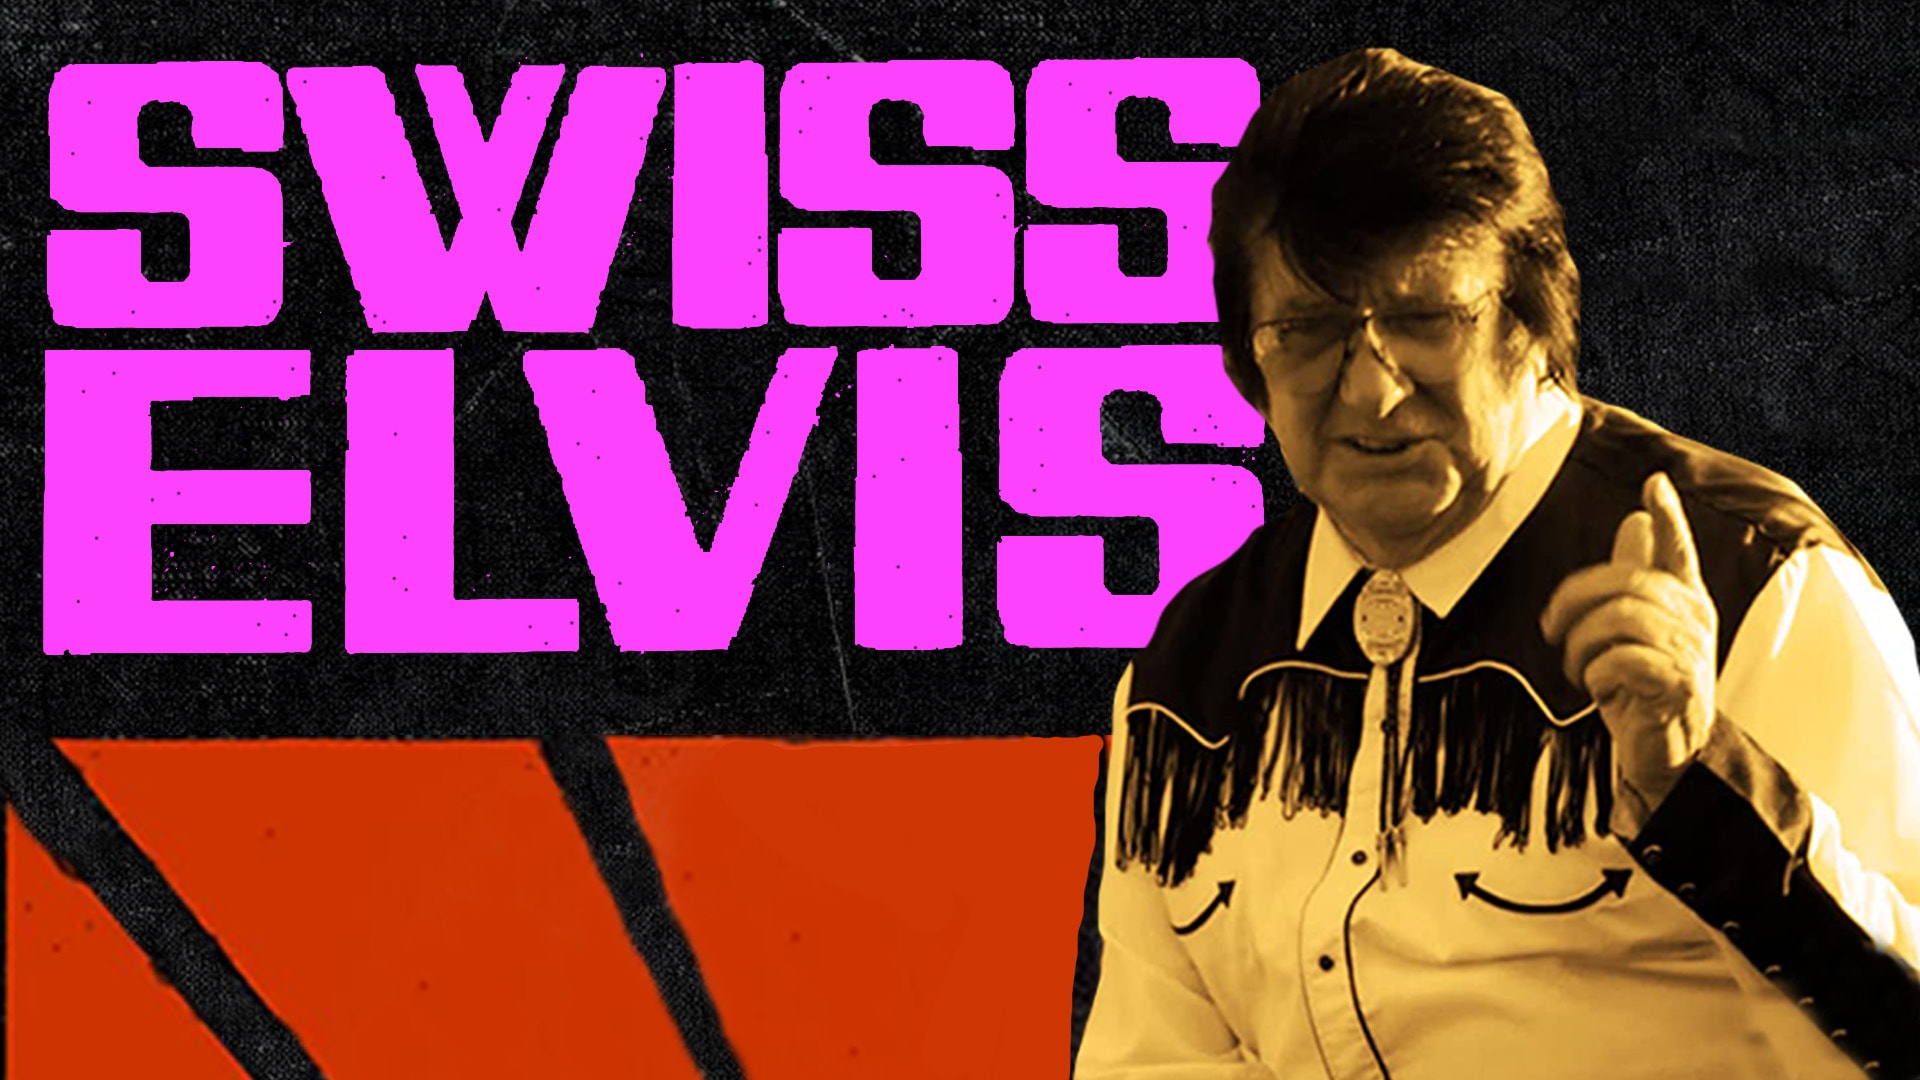 Swiss Elvis